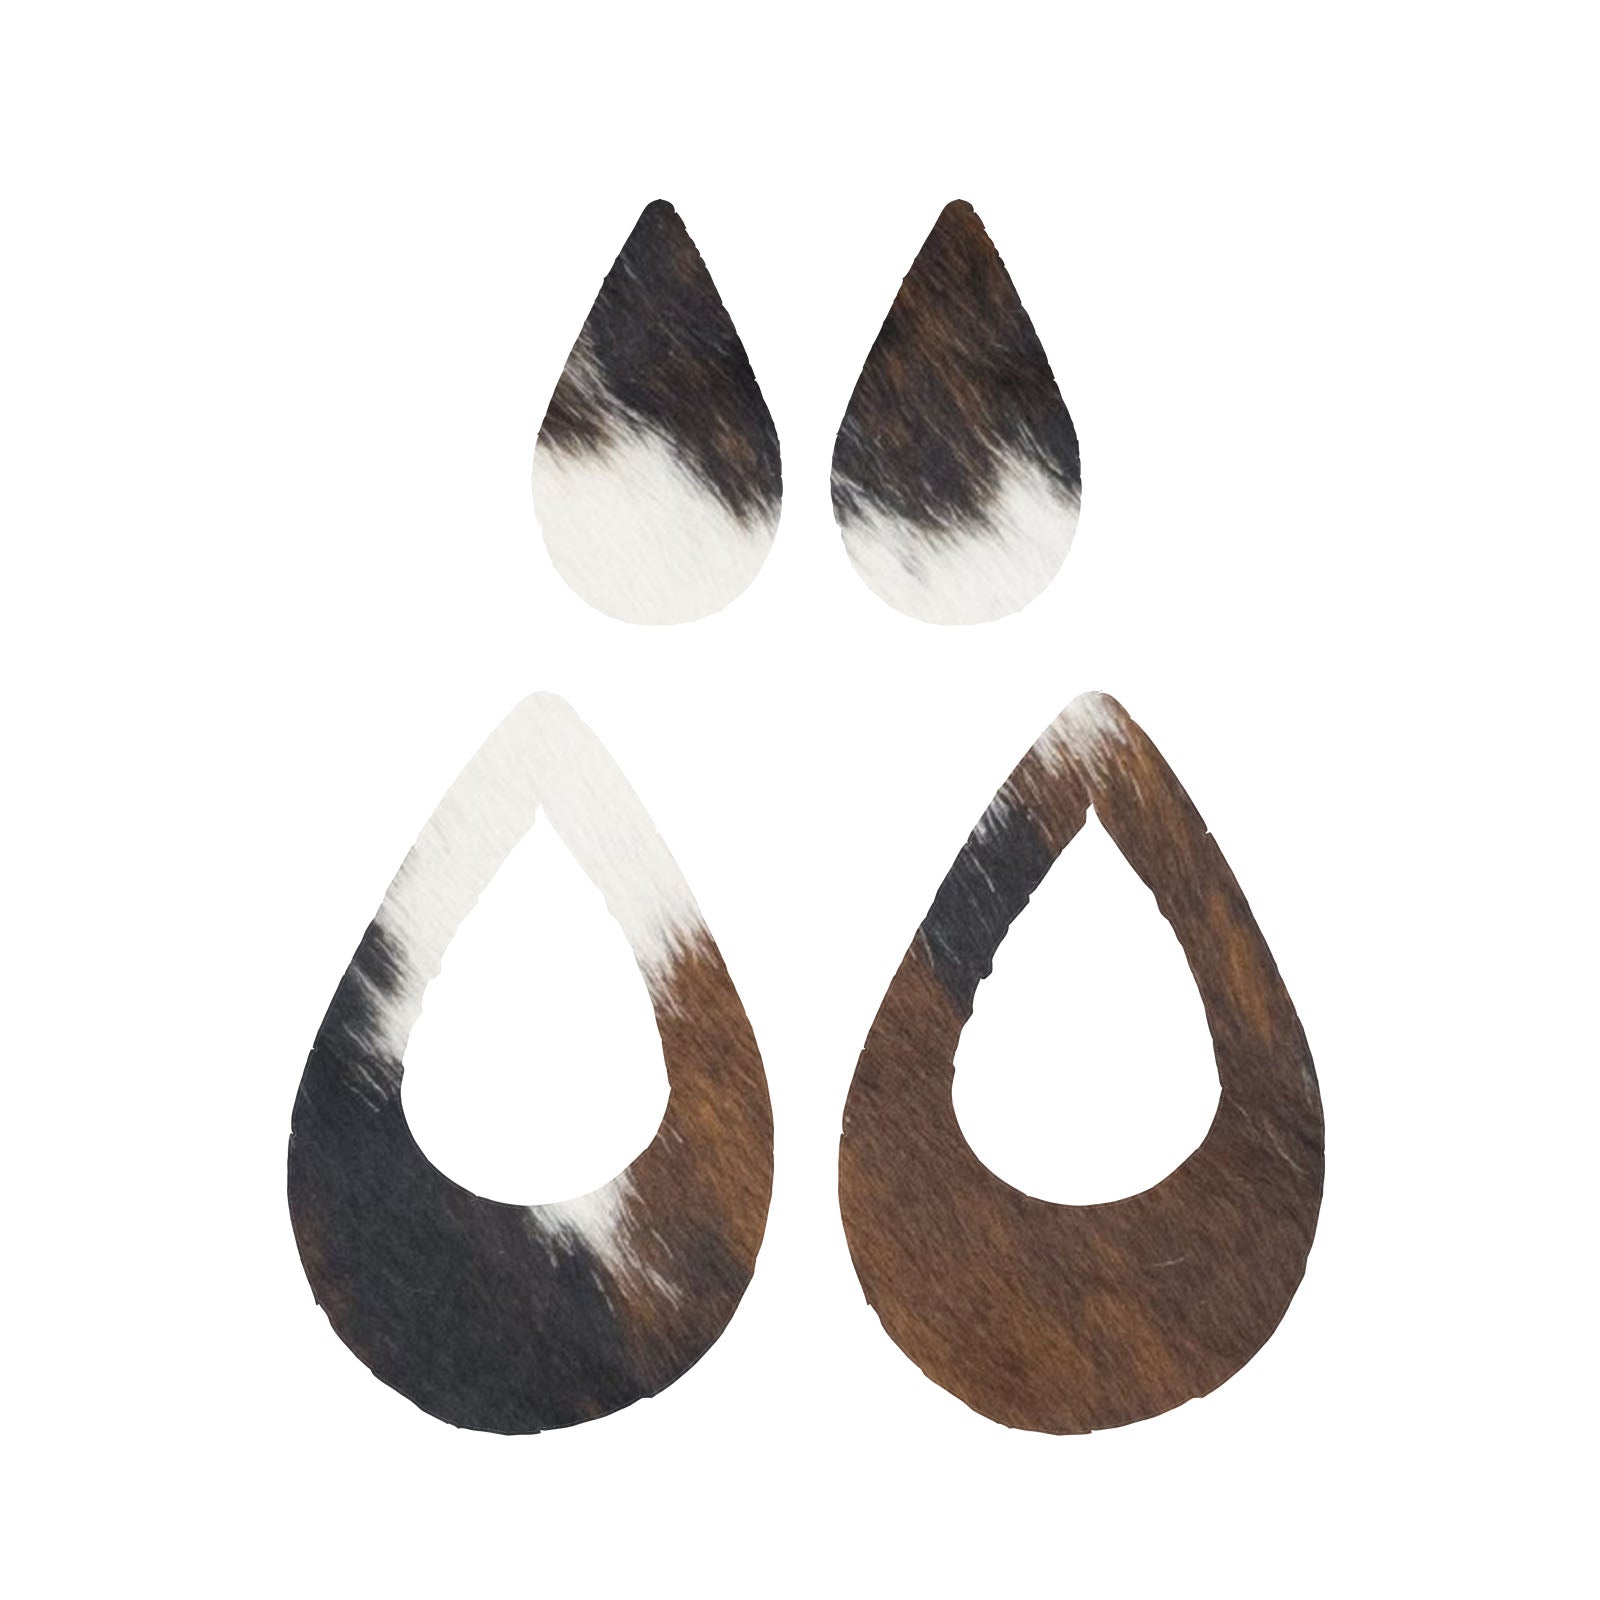 Tri-Colored Black/Brown/Off White Hair On Die Cut Earrings, Large Teardrop Window | The Leather Guy